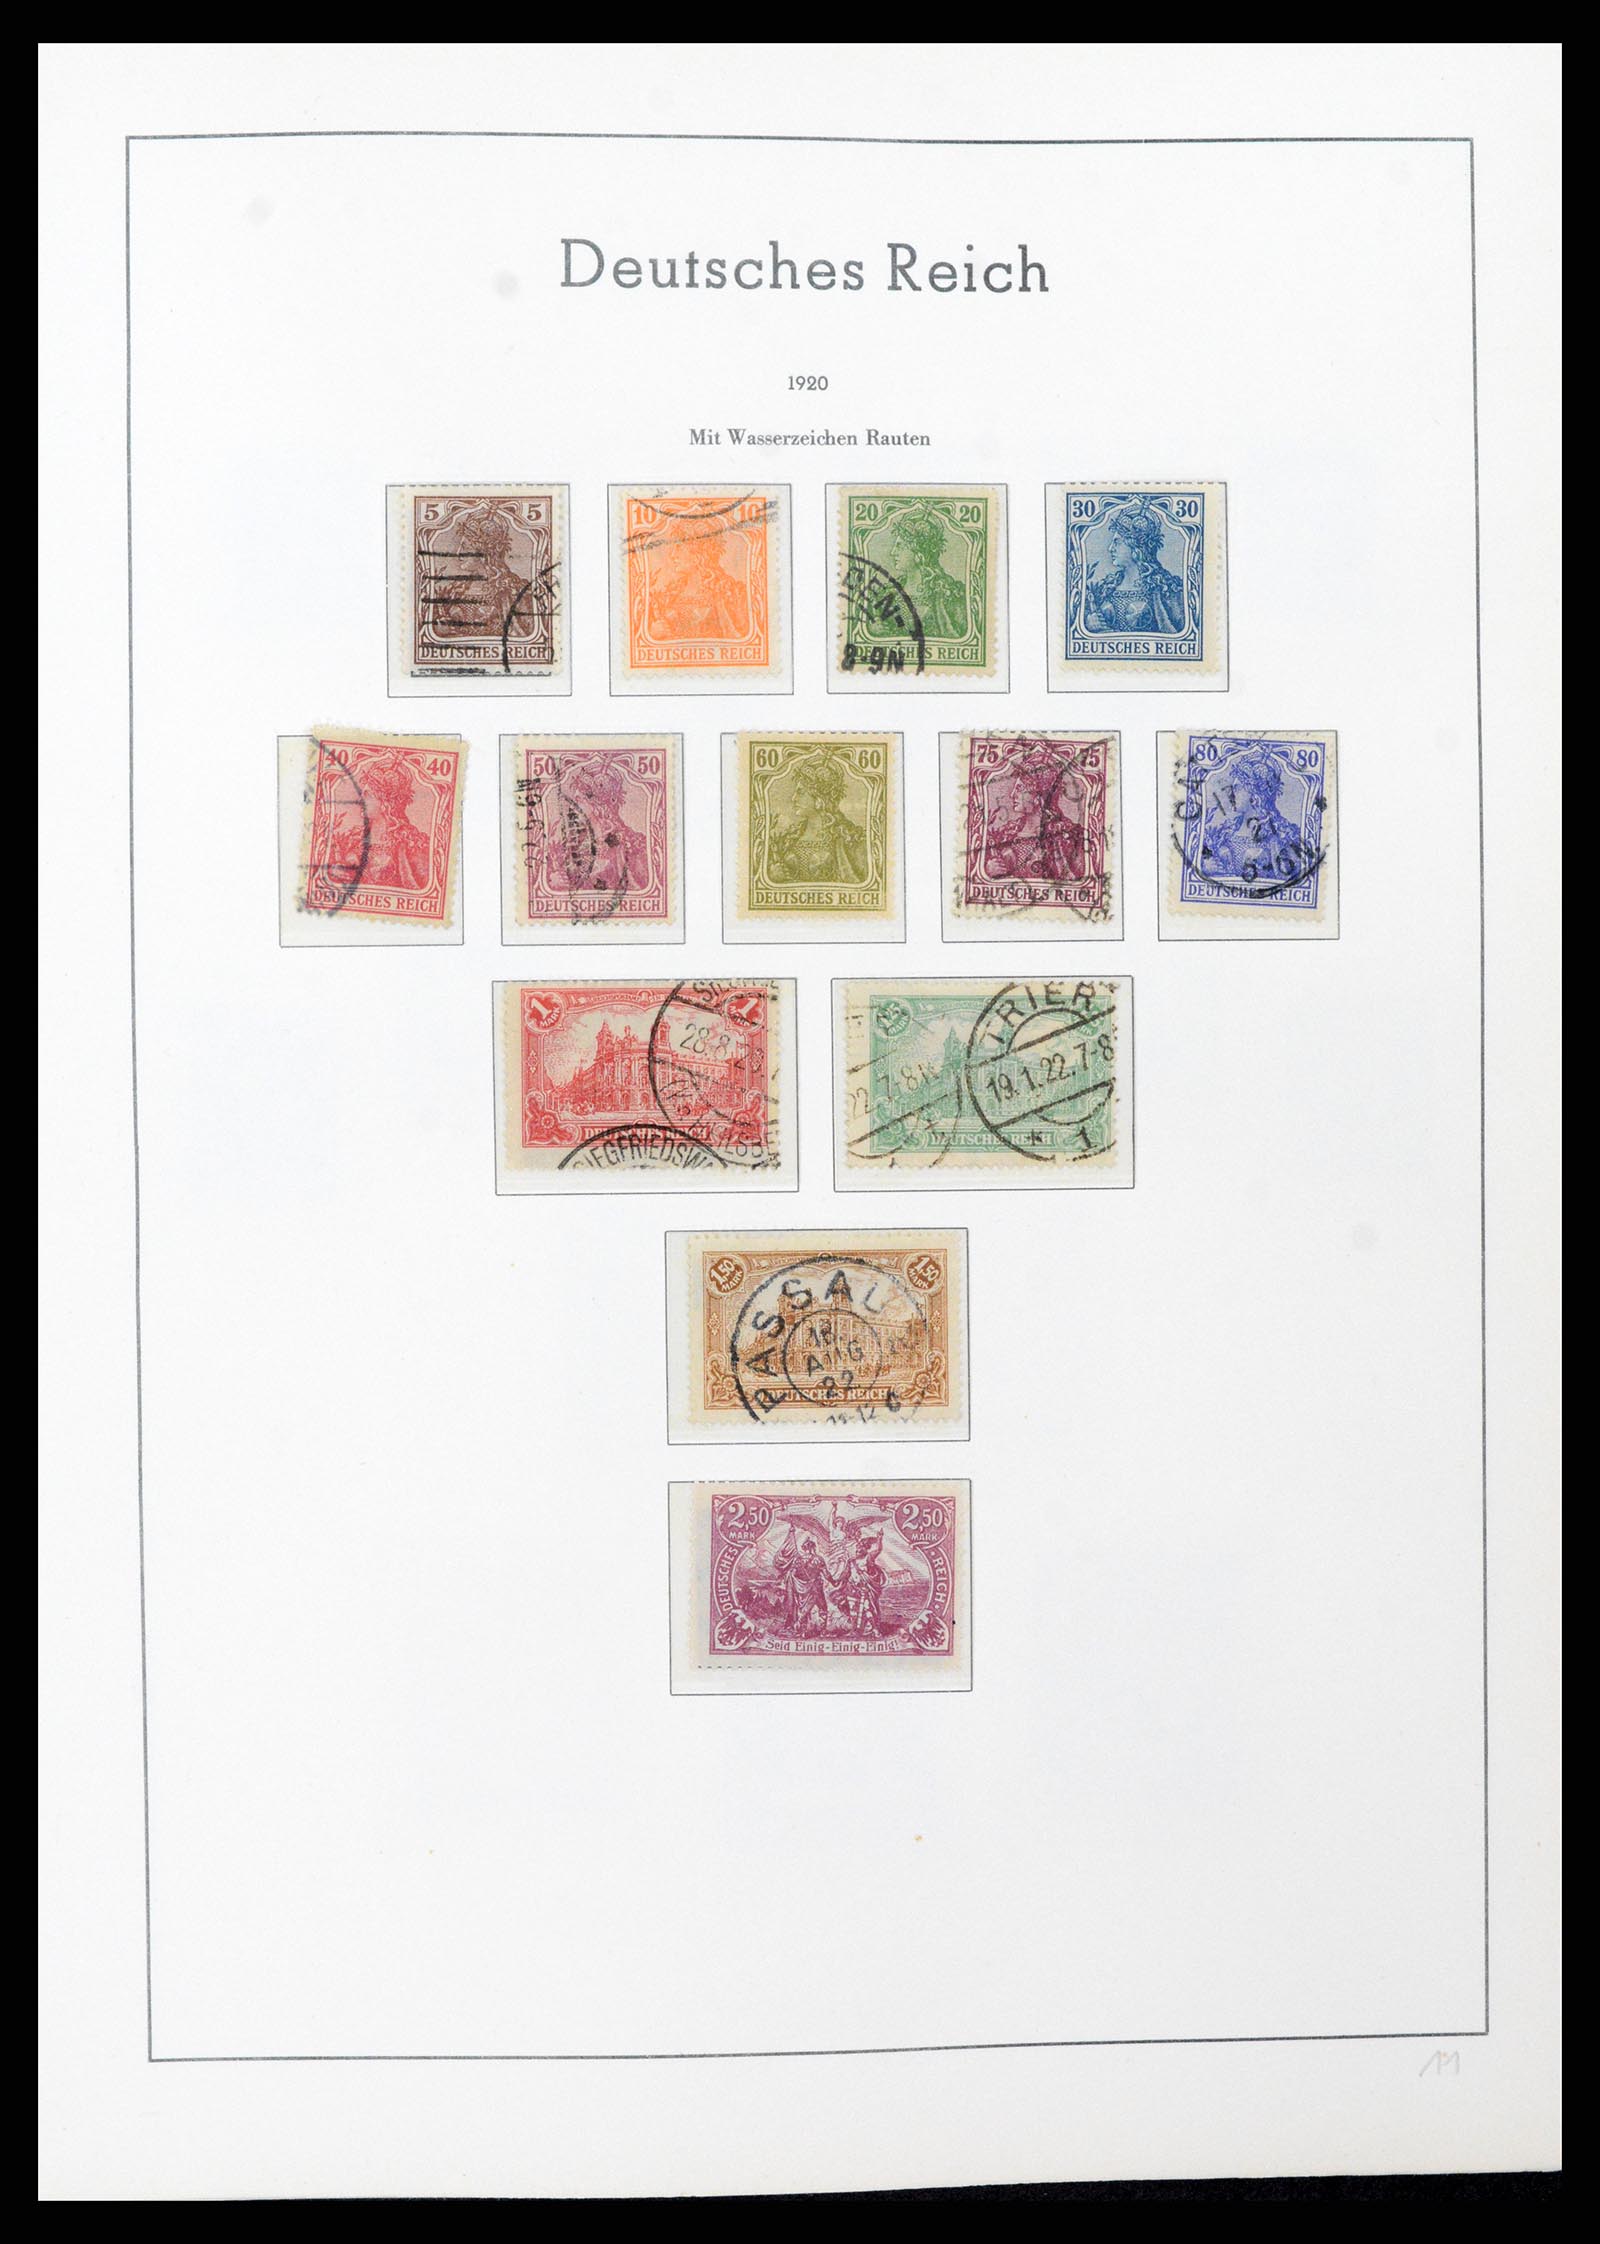 37589 012 - Stamp collection 37589 German Reich 1872-1945.